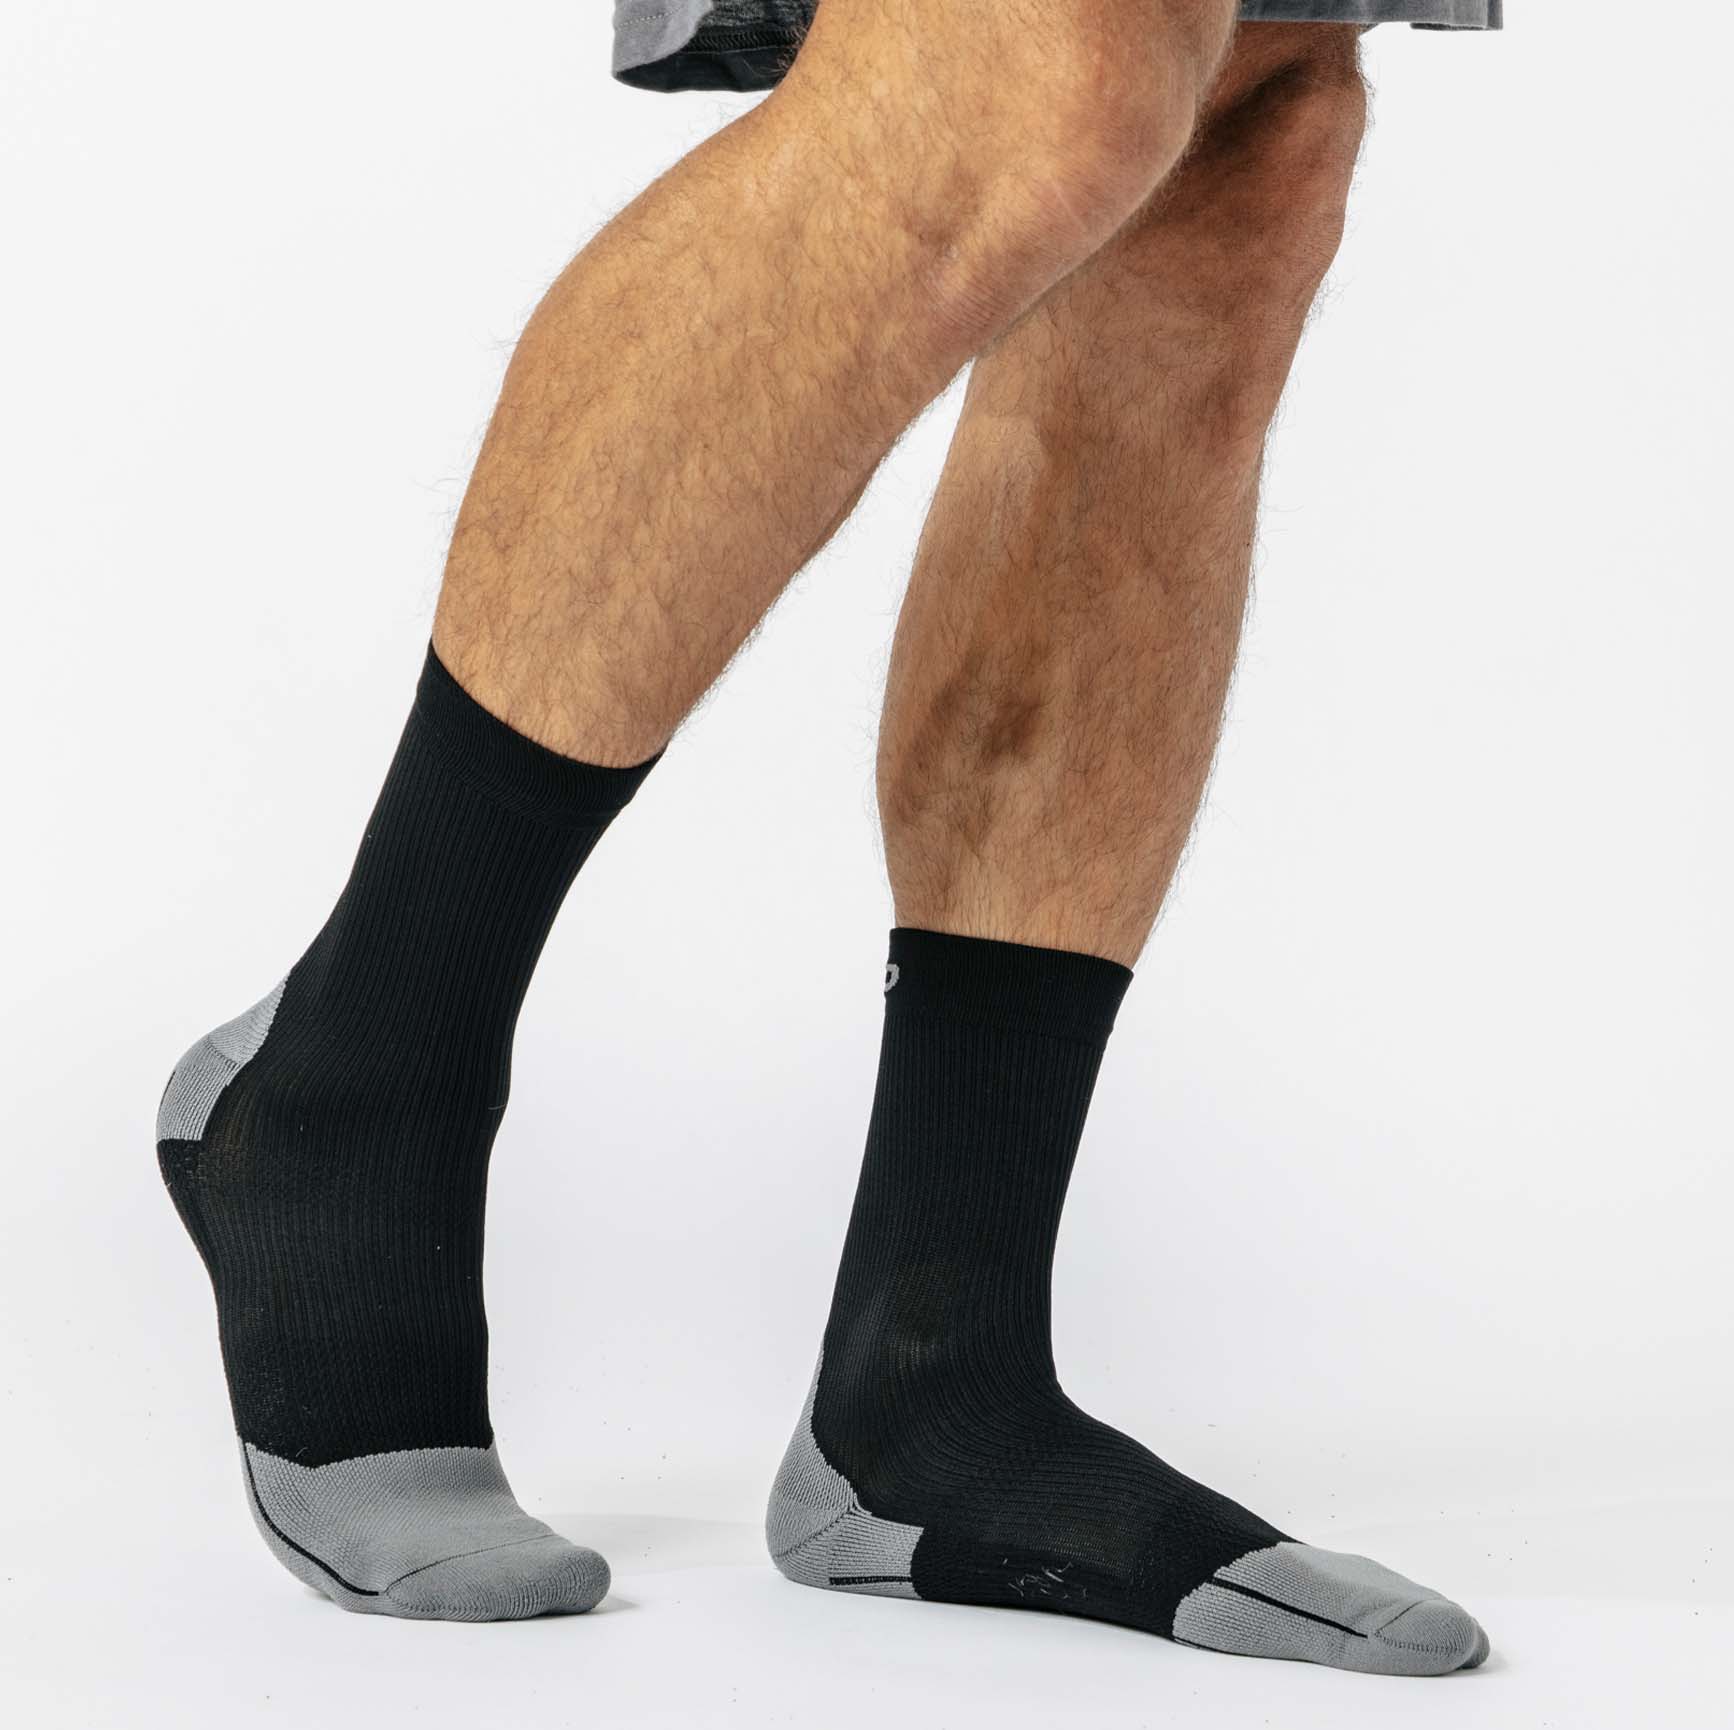 Graduated 20-25mmHg Compression Leg Sleeves (Pair) - Black